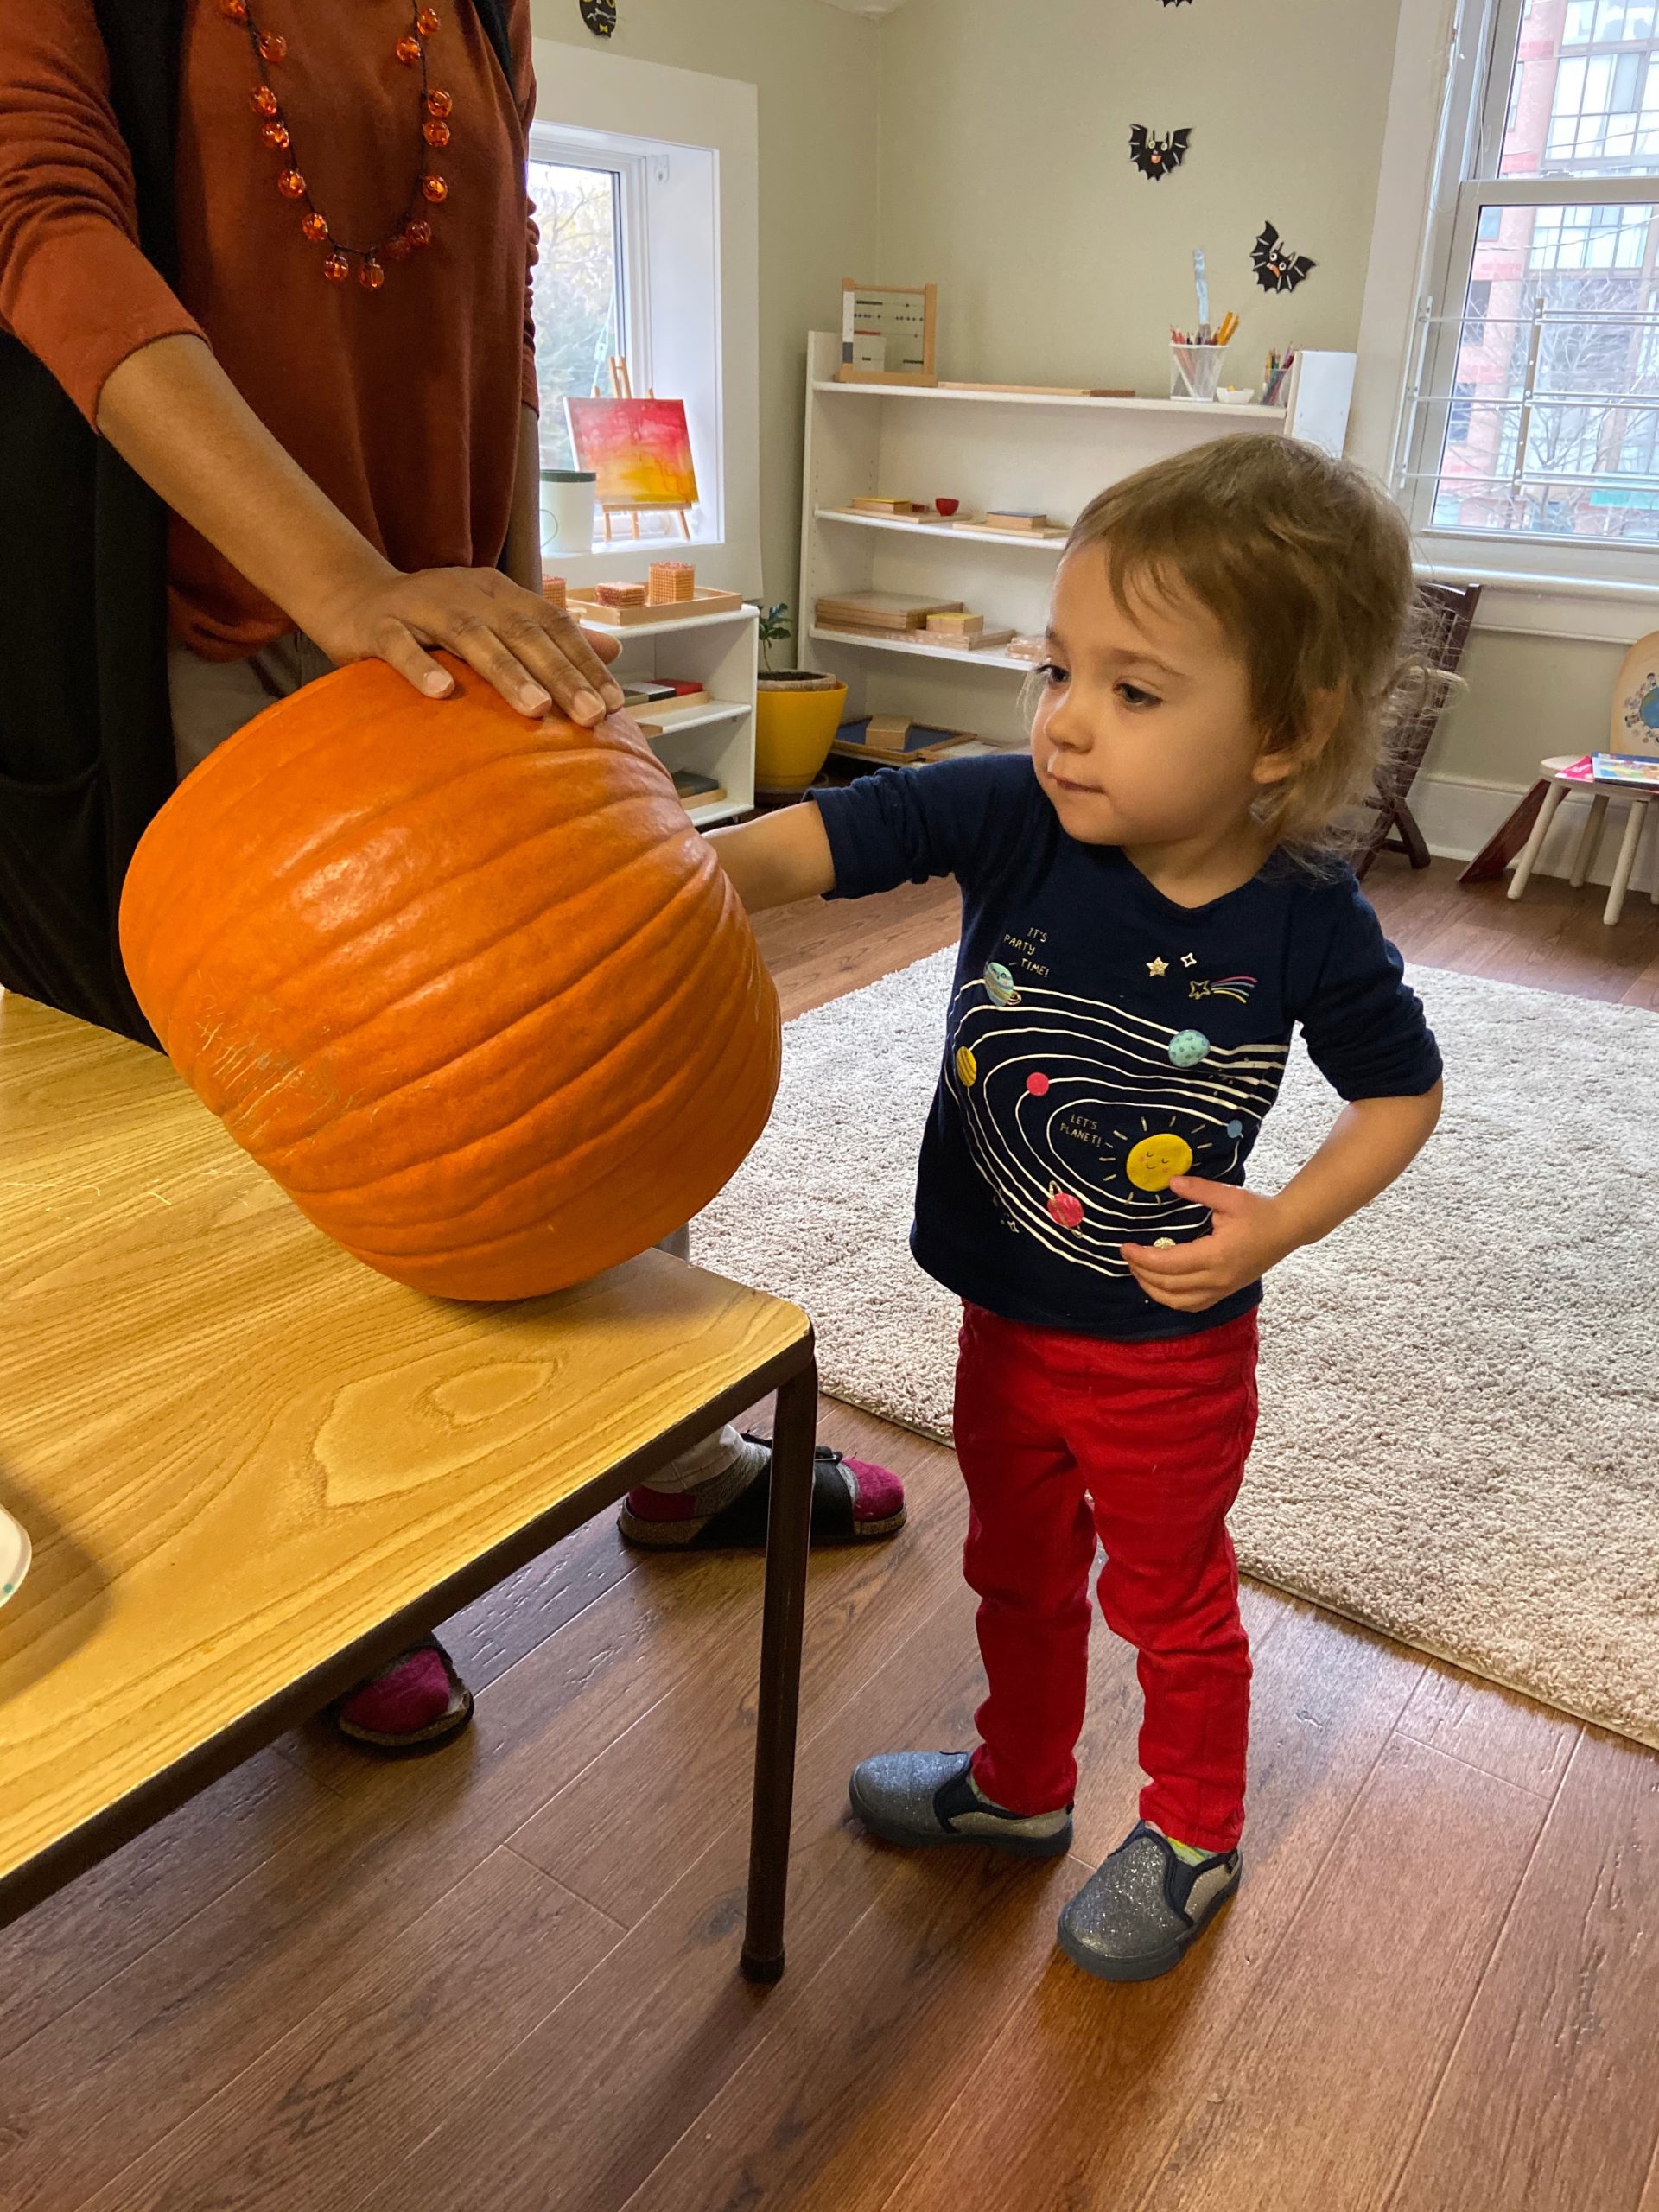 Pumpkin Carving for Halloween